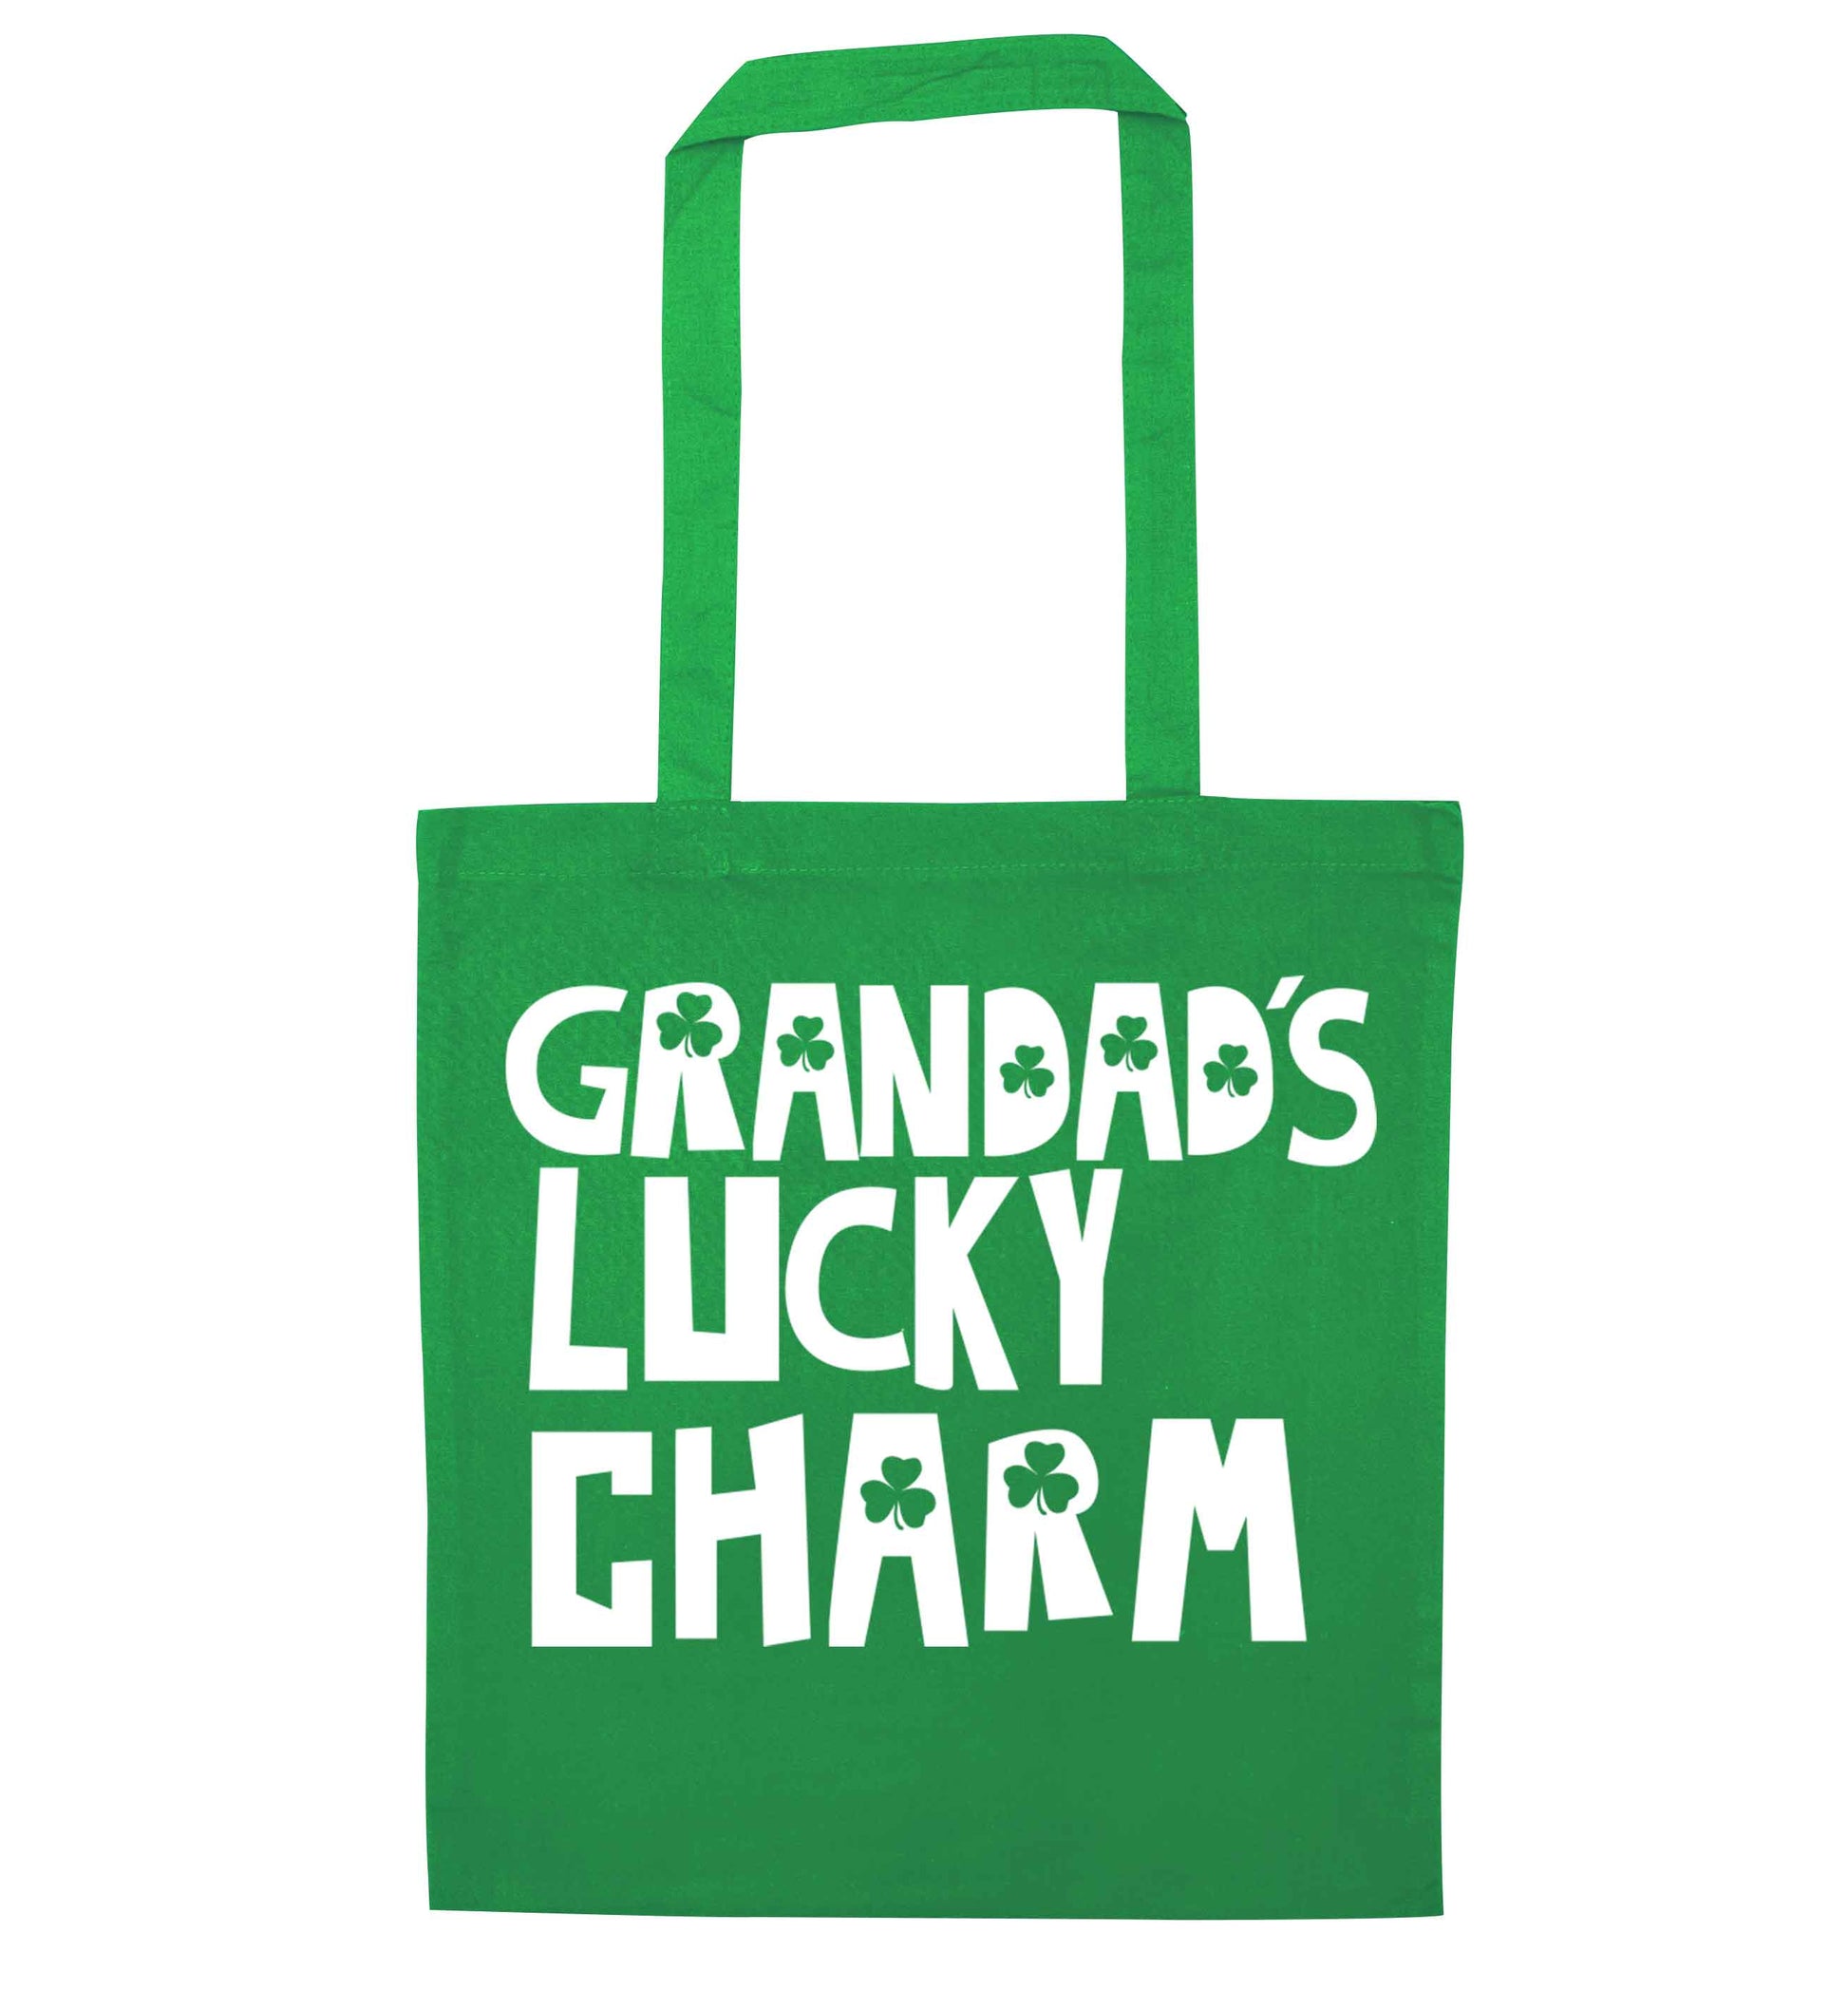 Grandad's lucky charm  green tote bag